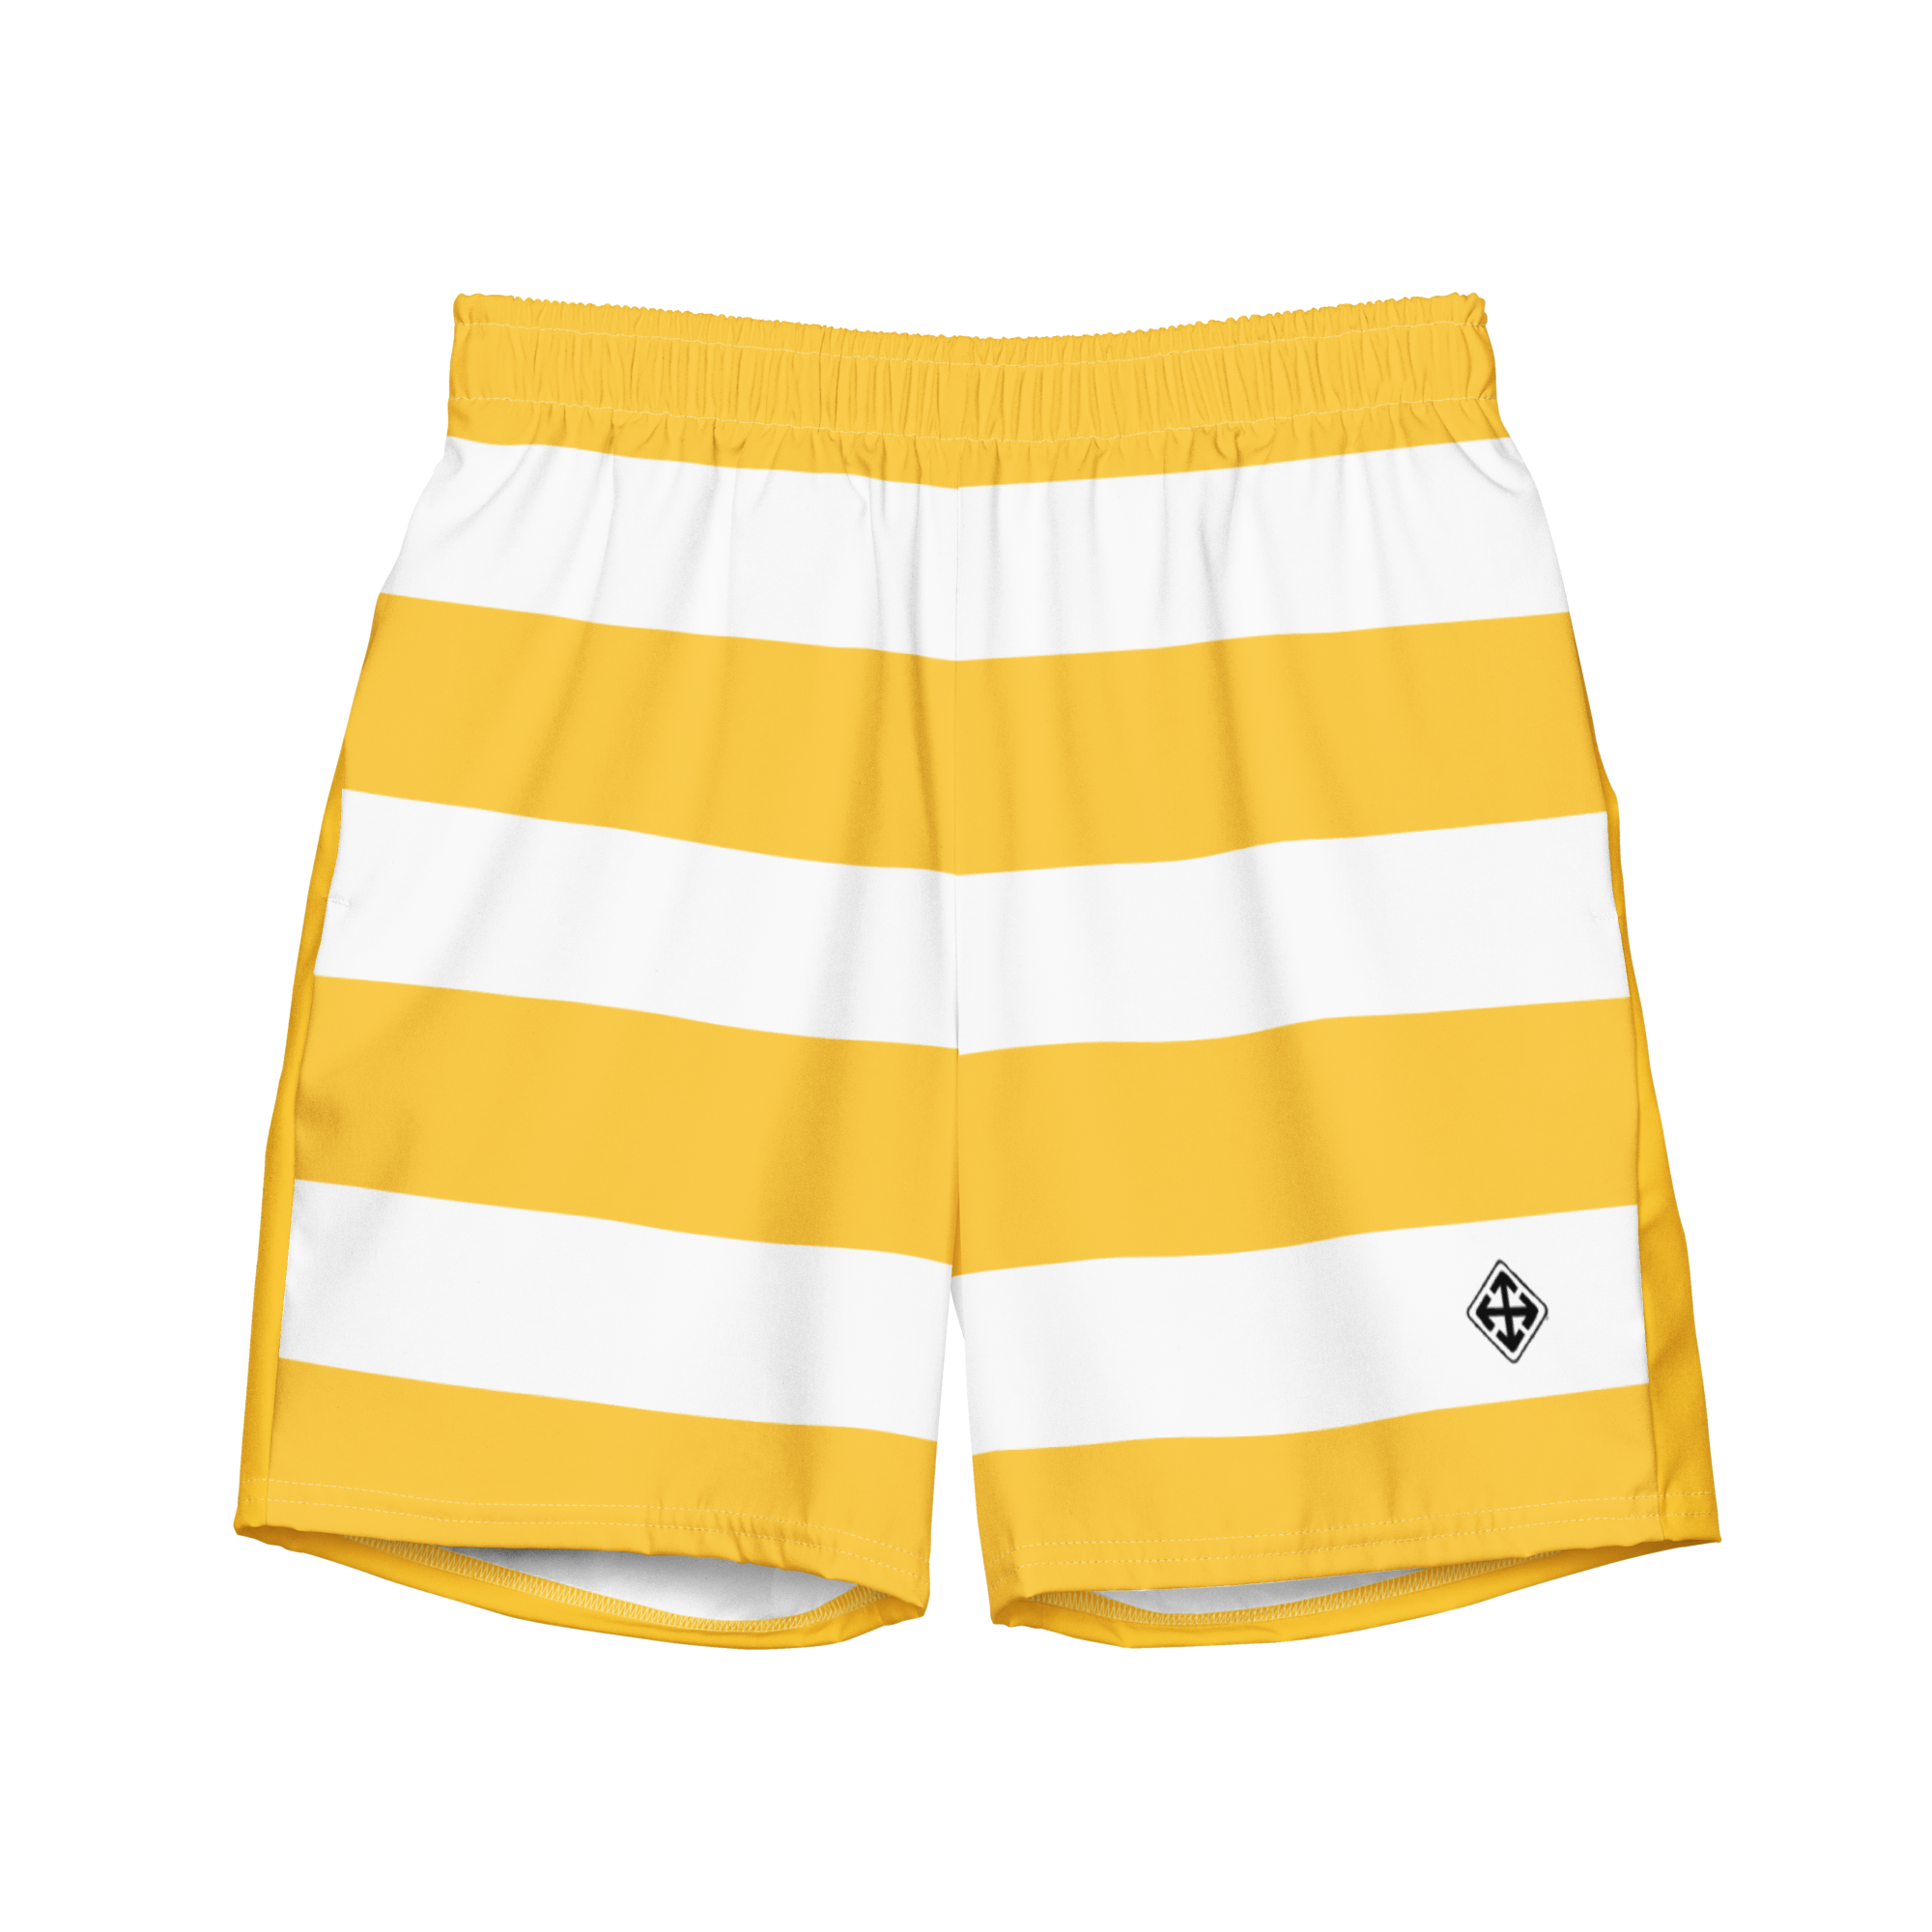 Jail House Board Shorts - Greg Noll Style Vintage Swim Trunks | Evoke Apparel - yellow